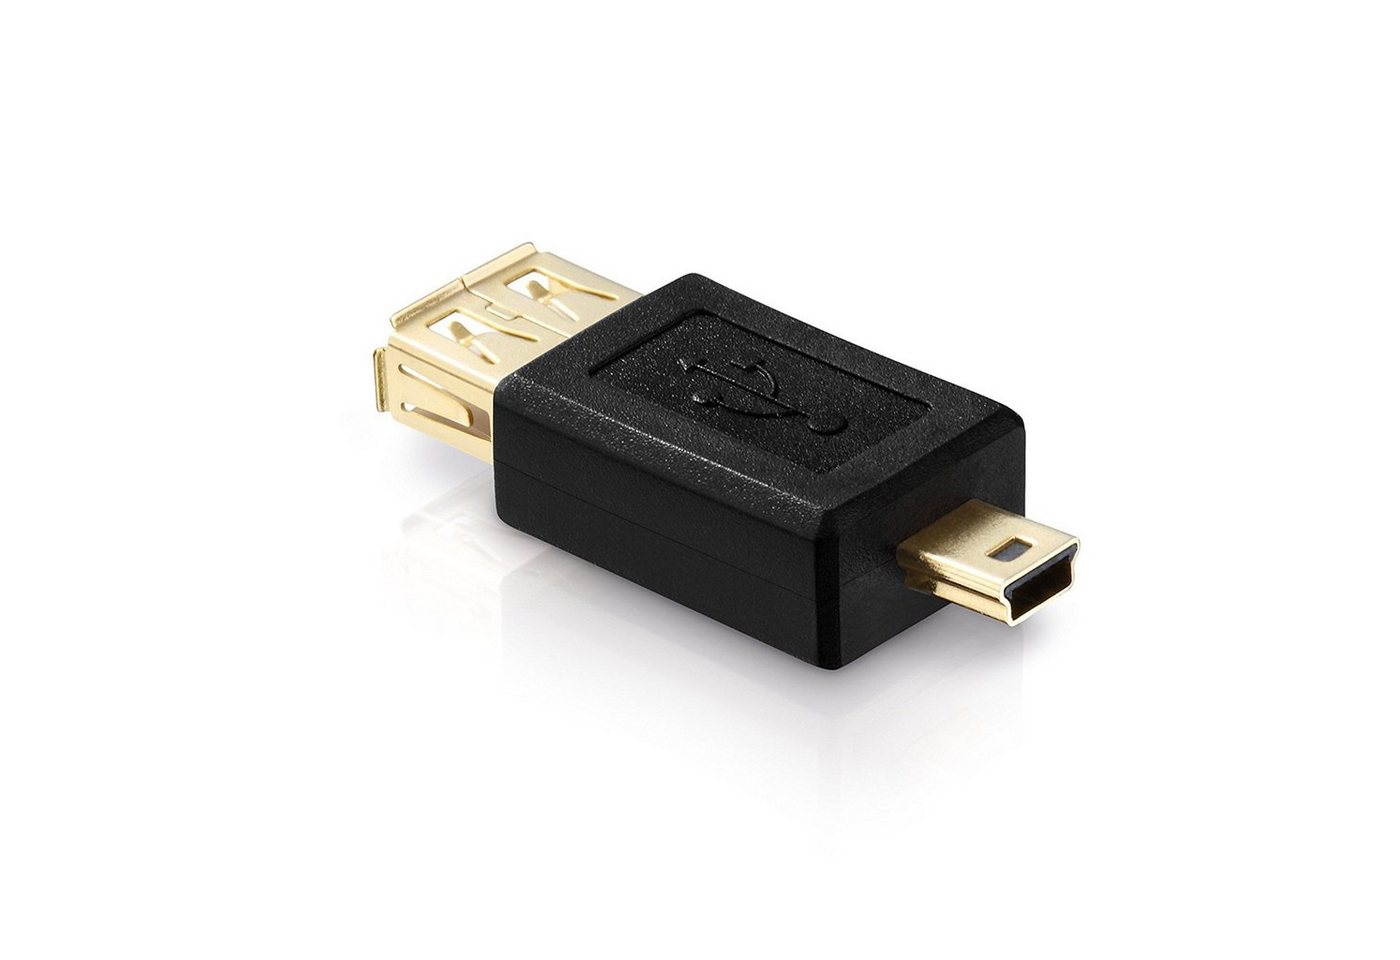 adaptare adaptare 41022 USB 2.0-Adapter Mini-Stecker Typ B 5-polig auf Buchse USB-Kabel von adaptare